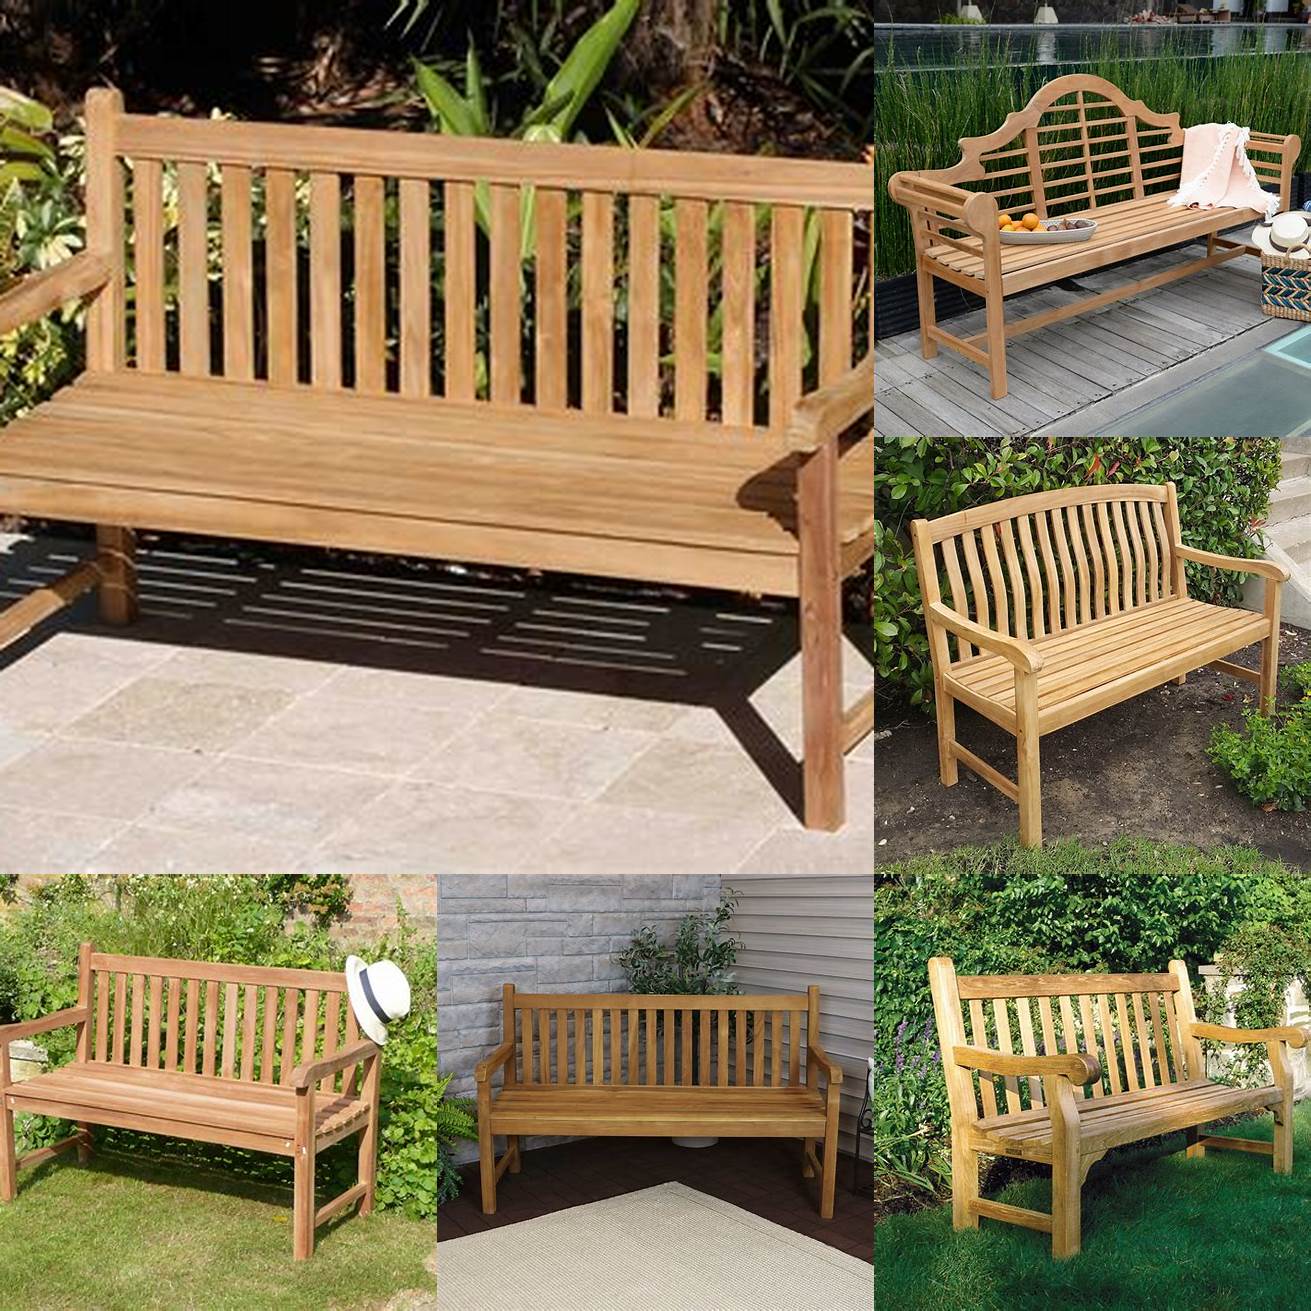 A teak wood outdoor bench